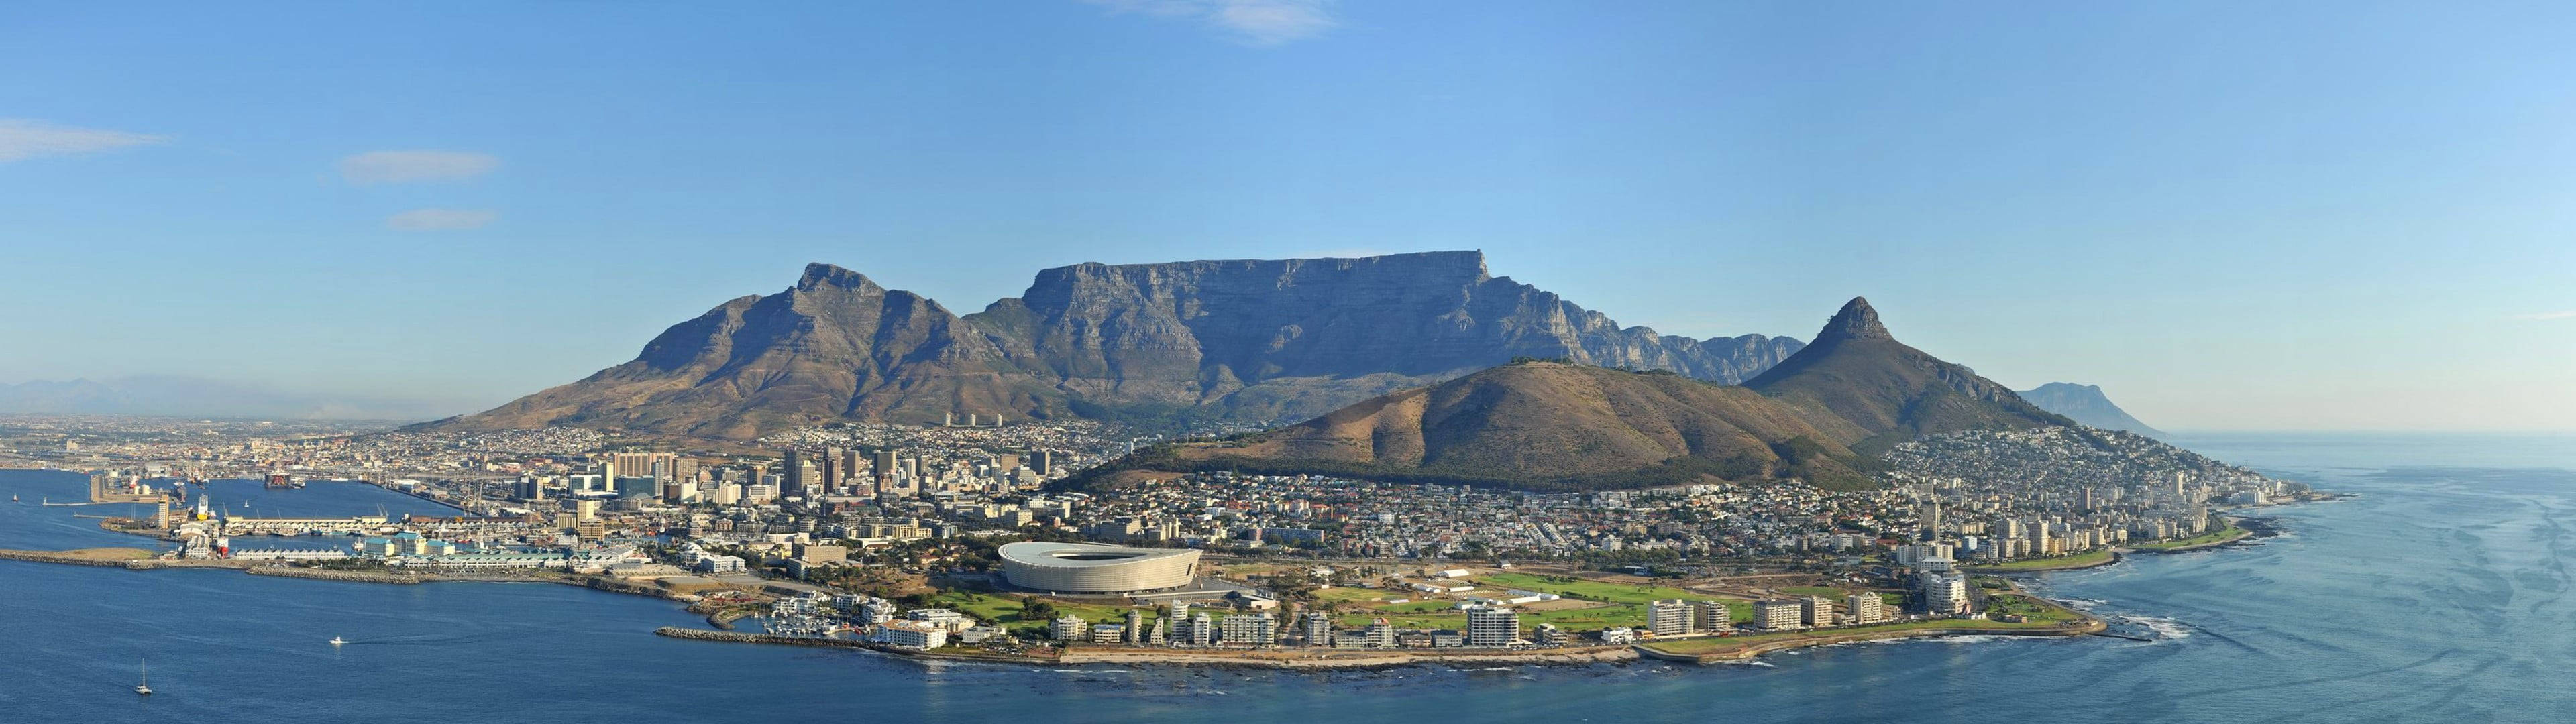 Kapstadtsüdafrika Panorama Wallpaper